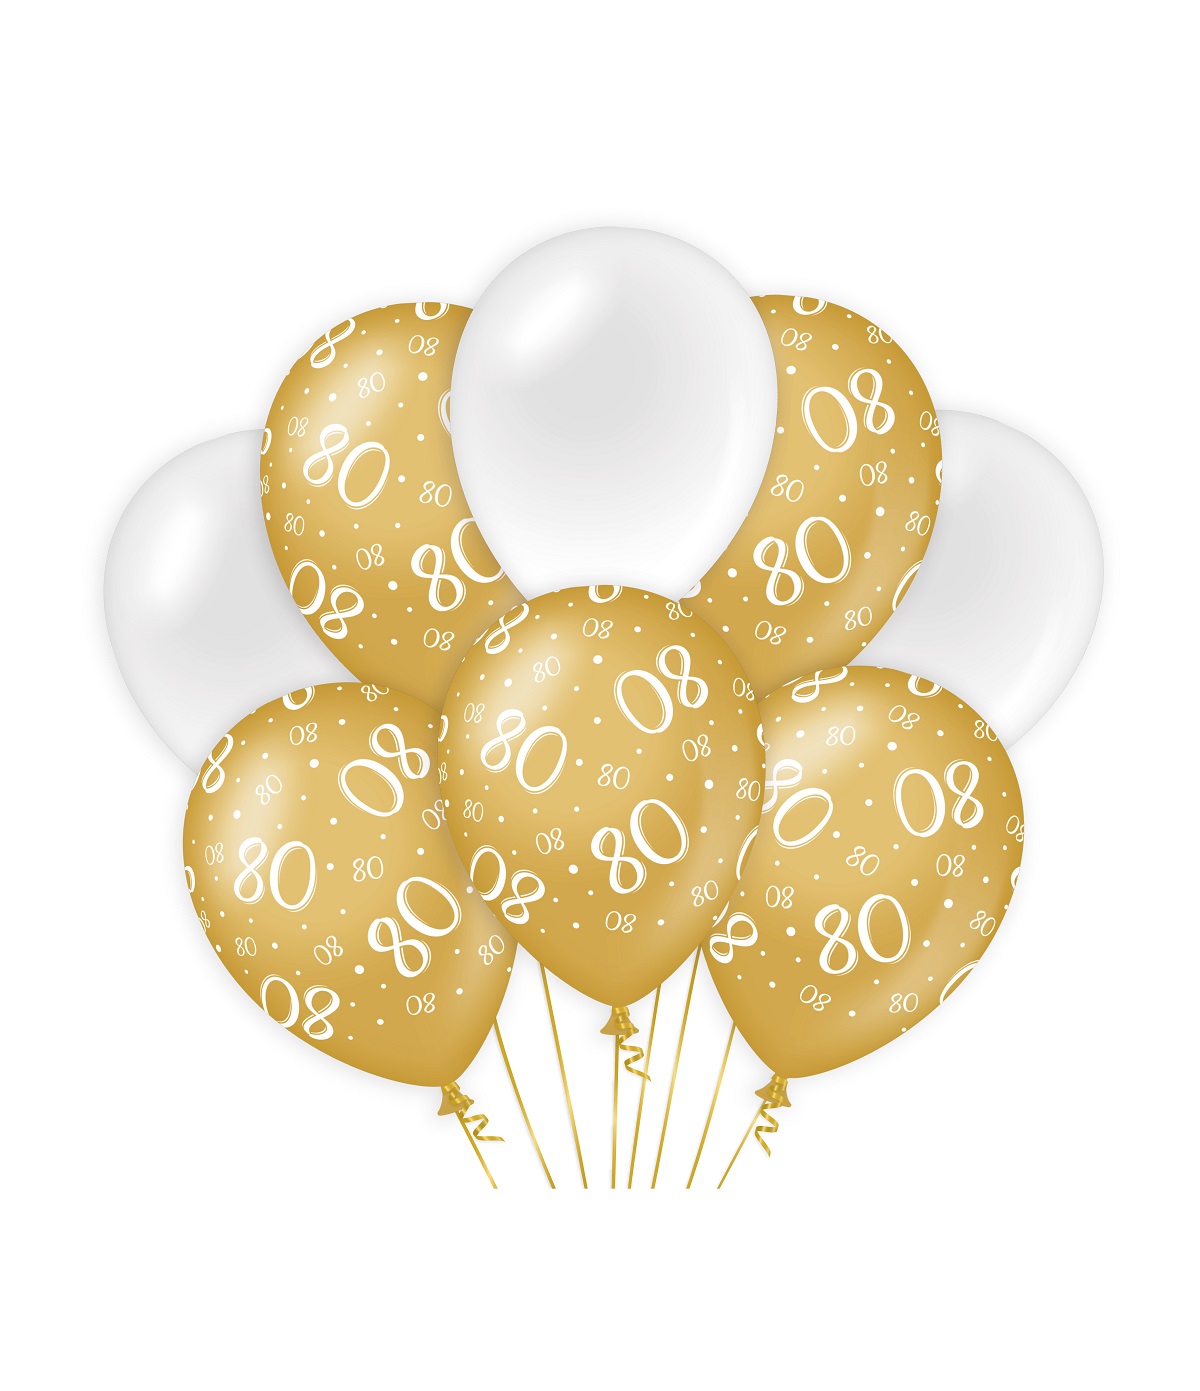 8st Ballonnen 80 Jaar Goud/Wit 12"